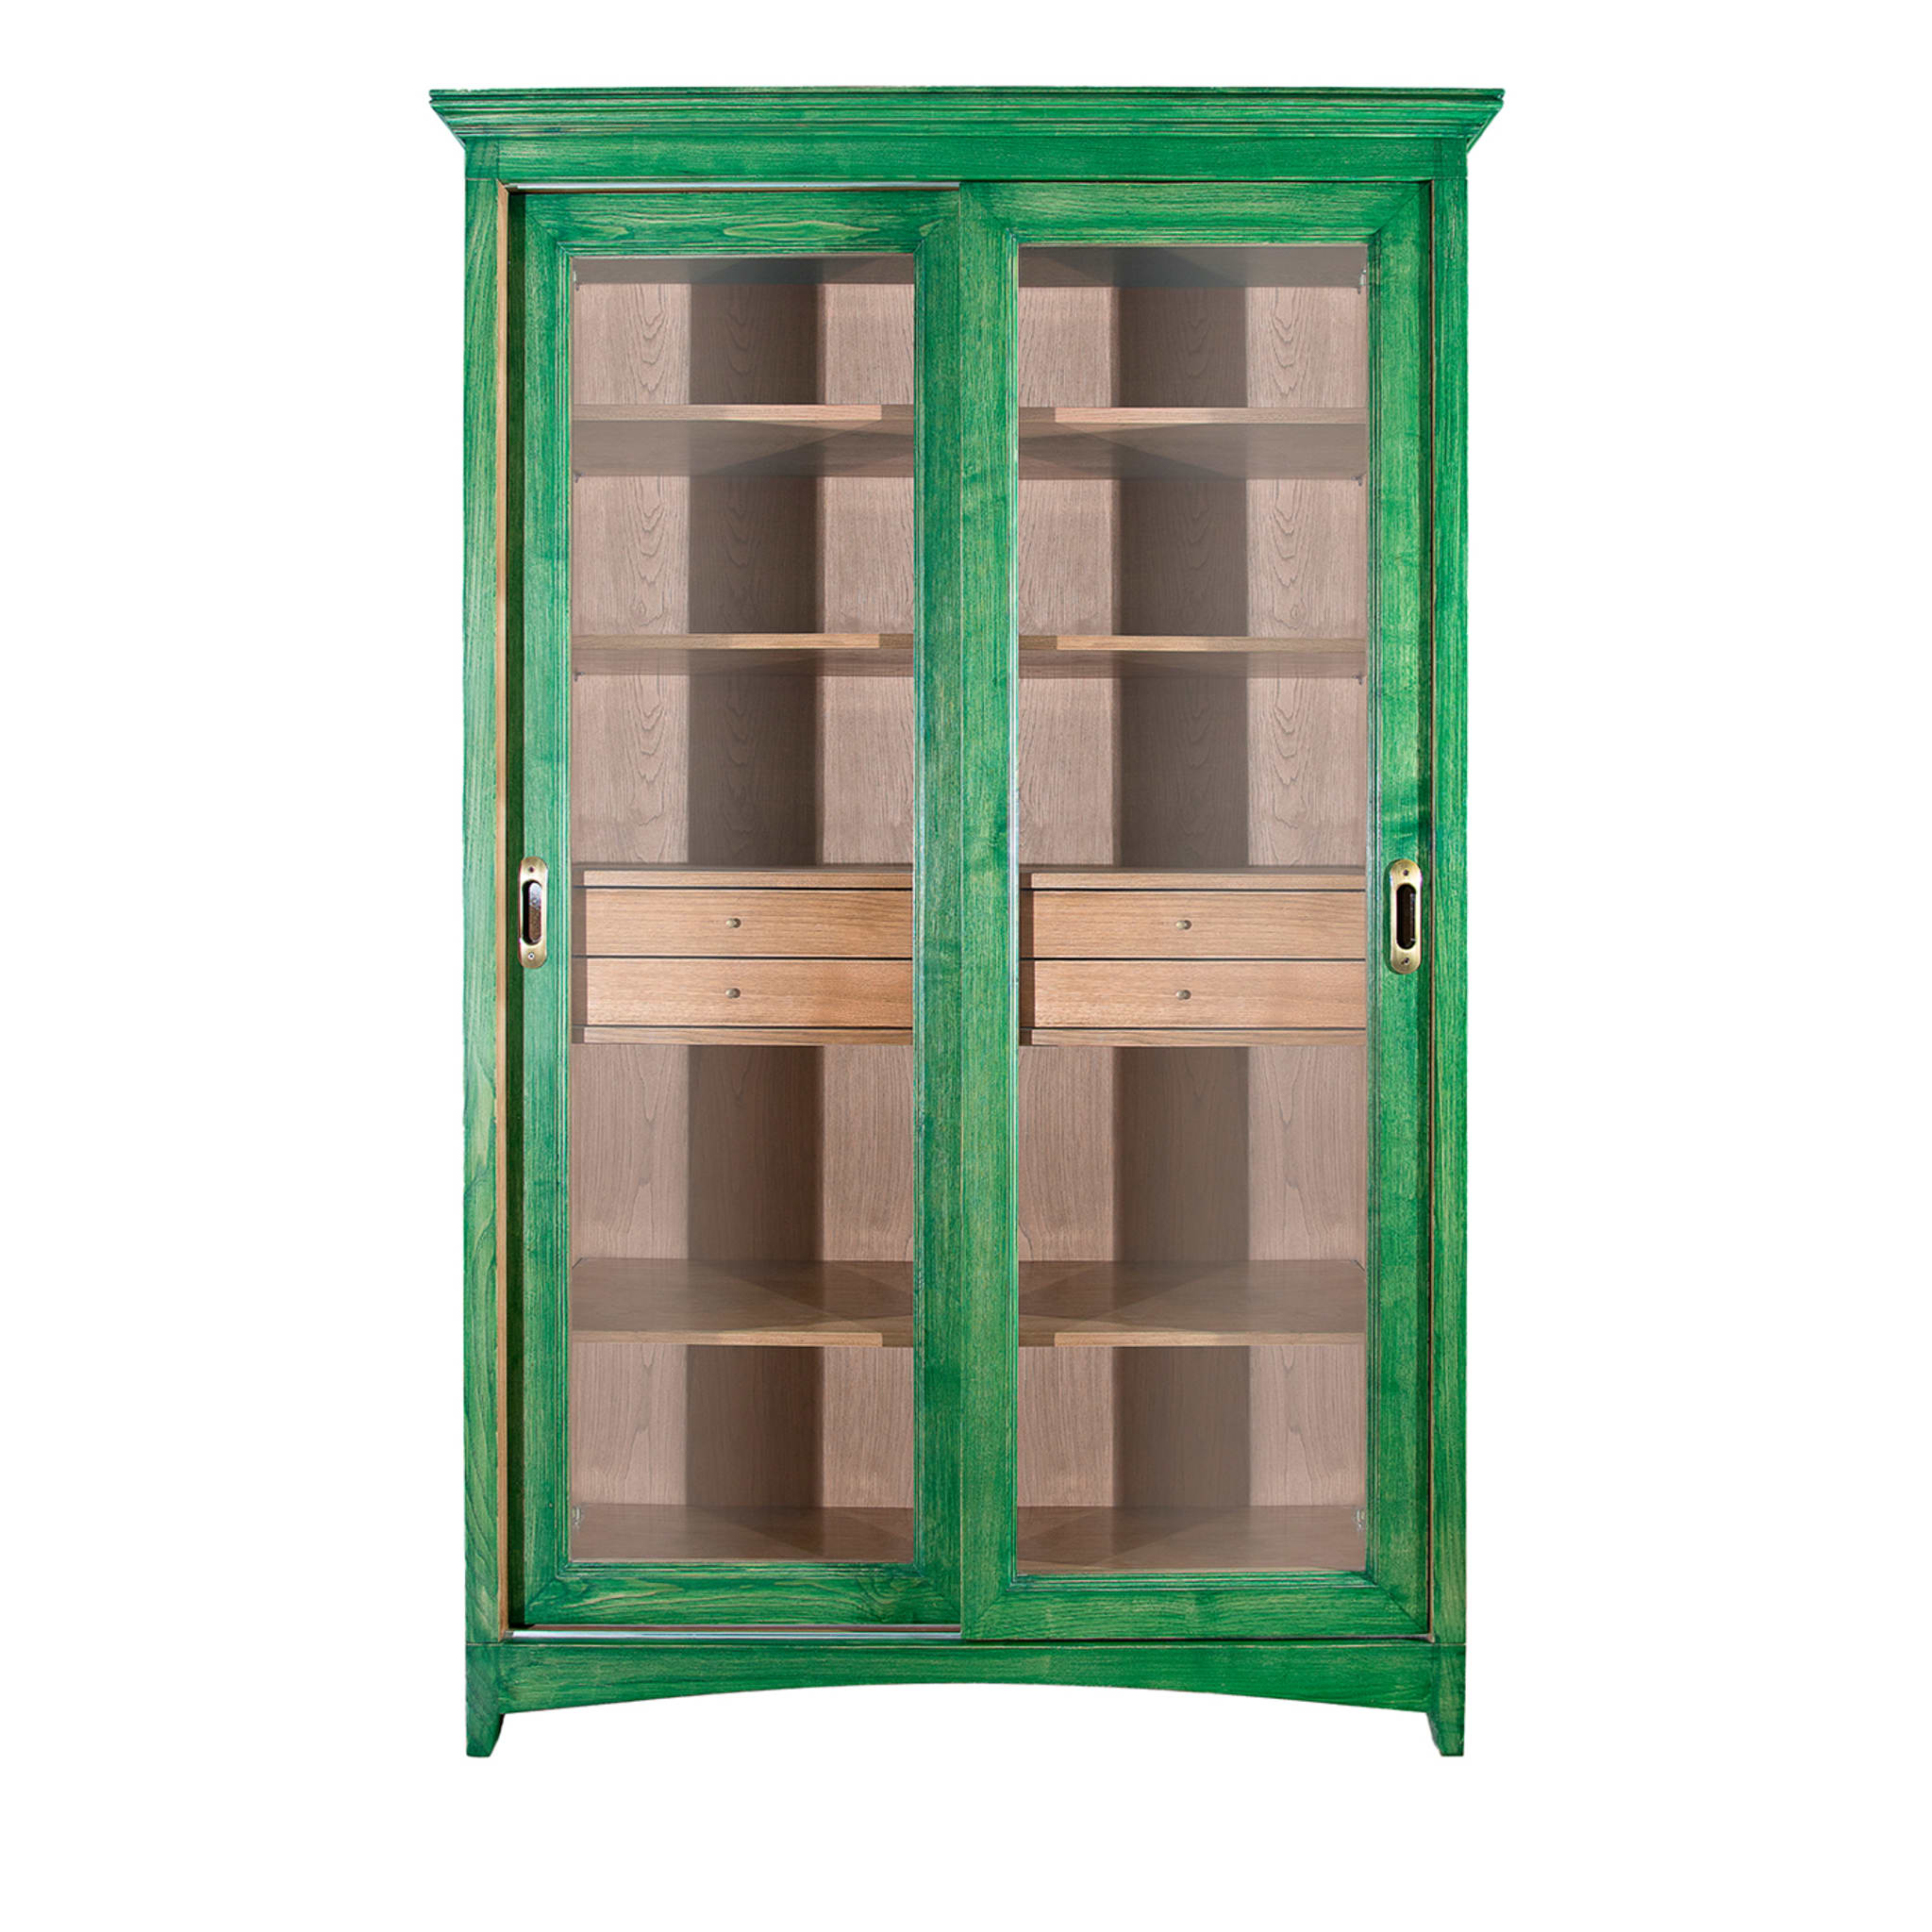 Green Sliding Doors Bookshelf #1 - Main view